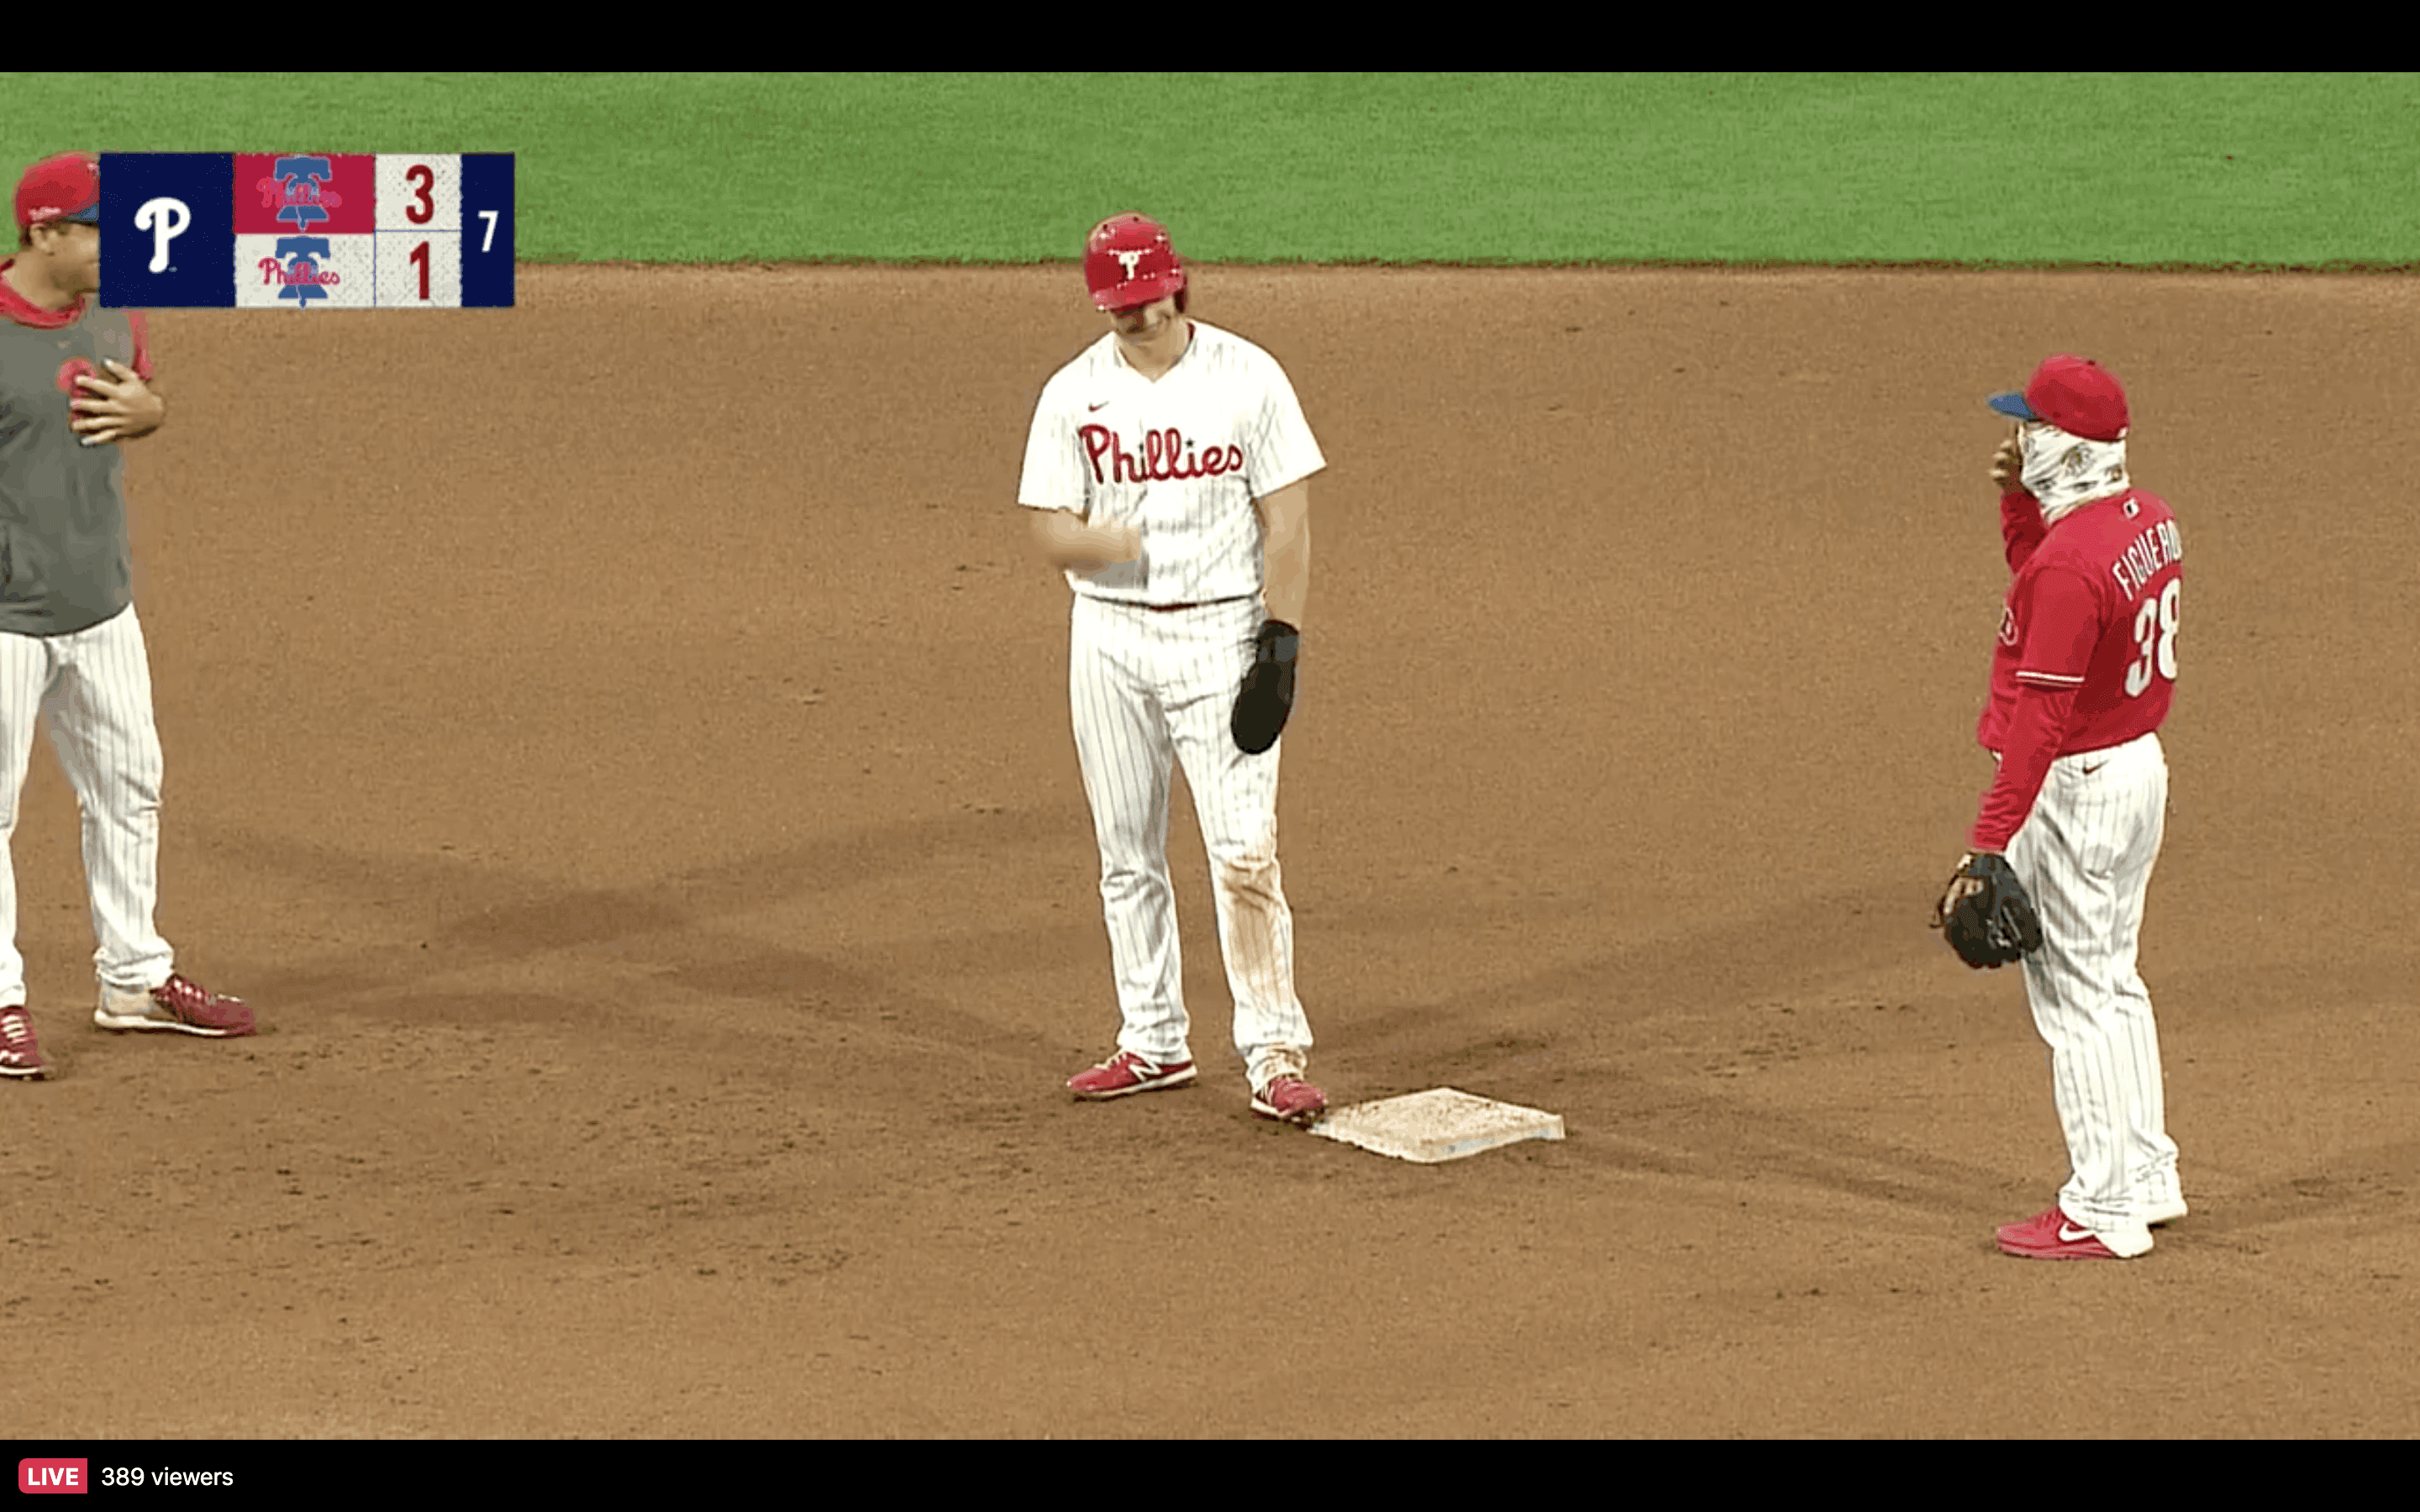 Boston Red Sox MLB Team Color Hooded Gaiter